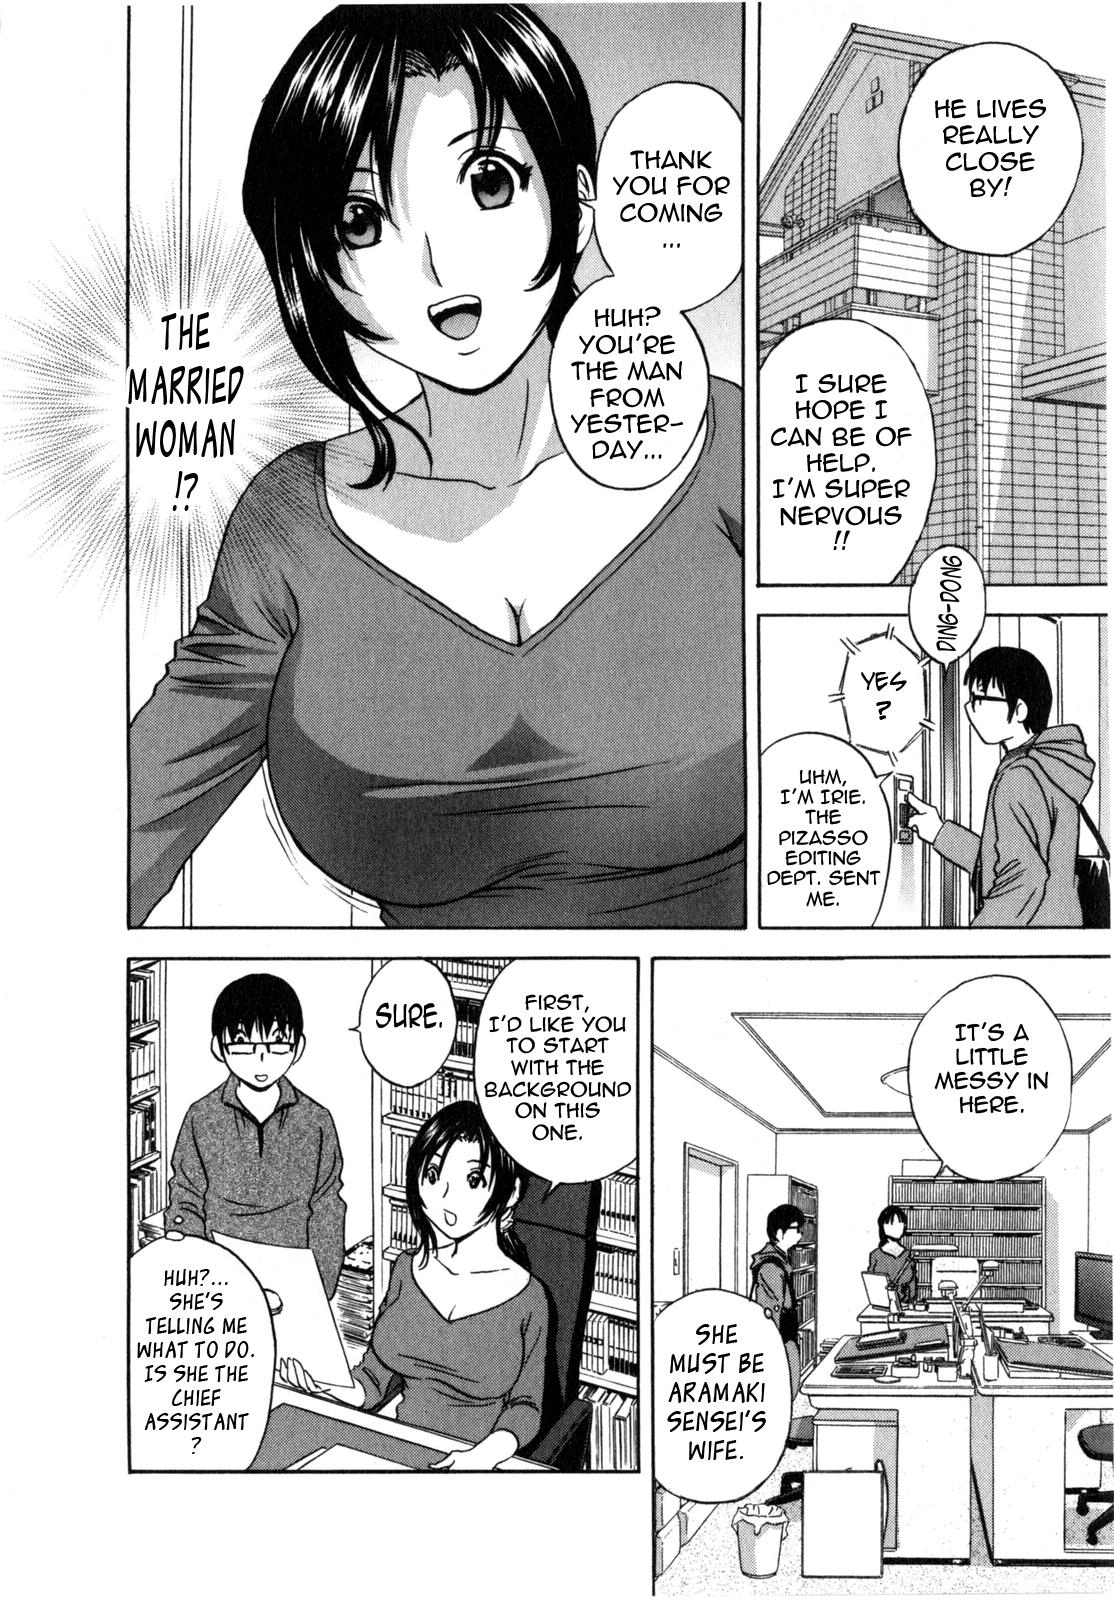 [Hidemaru] Life with Married Women Just Like a Manga 1 - Ch. 1-4 [English] {Tadanohito} 12